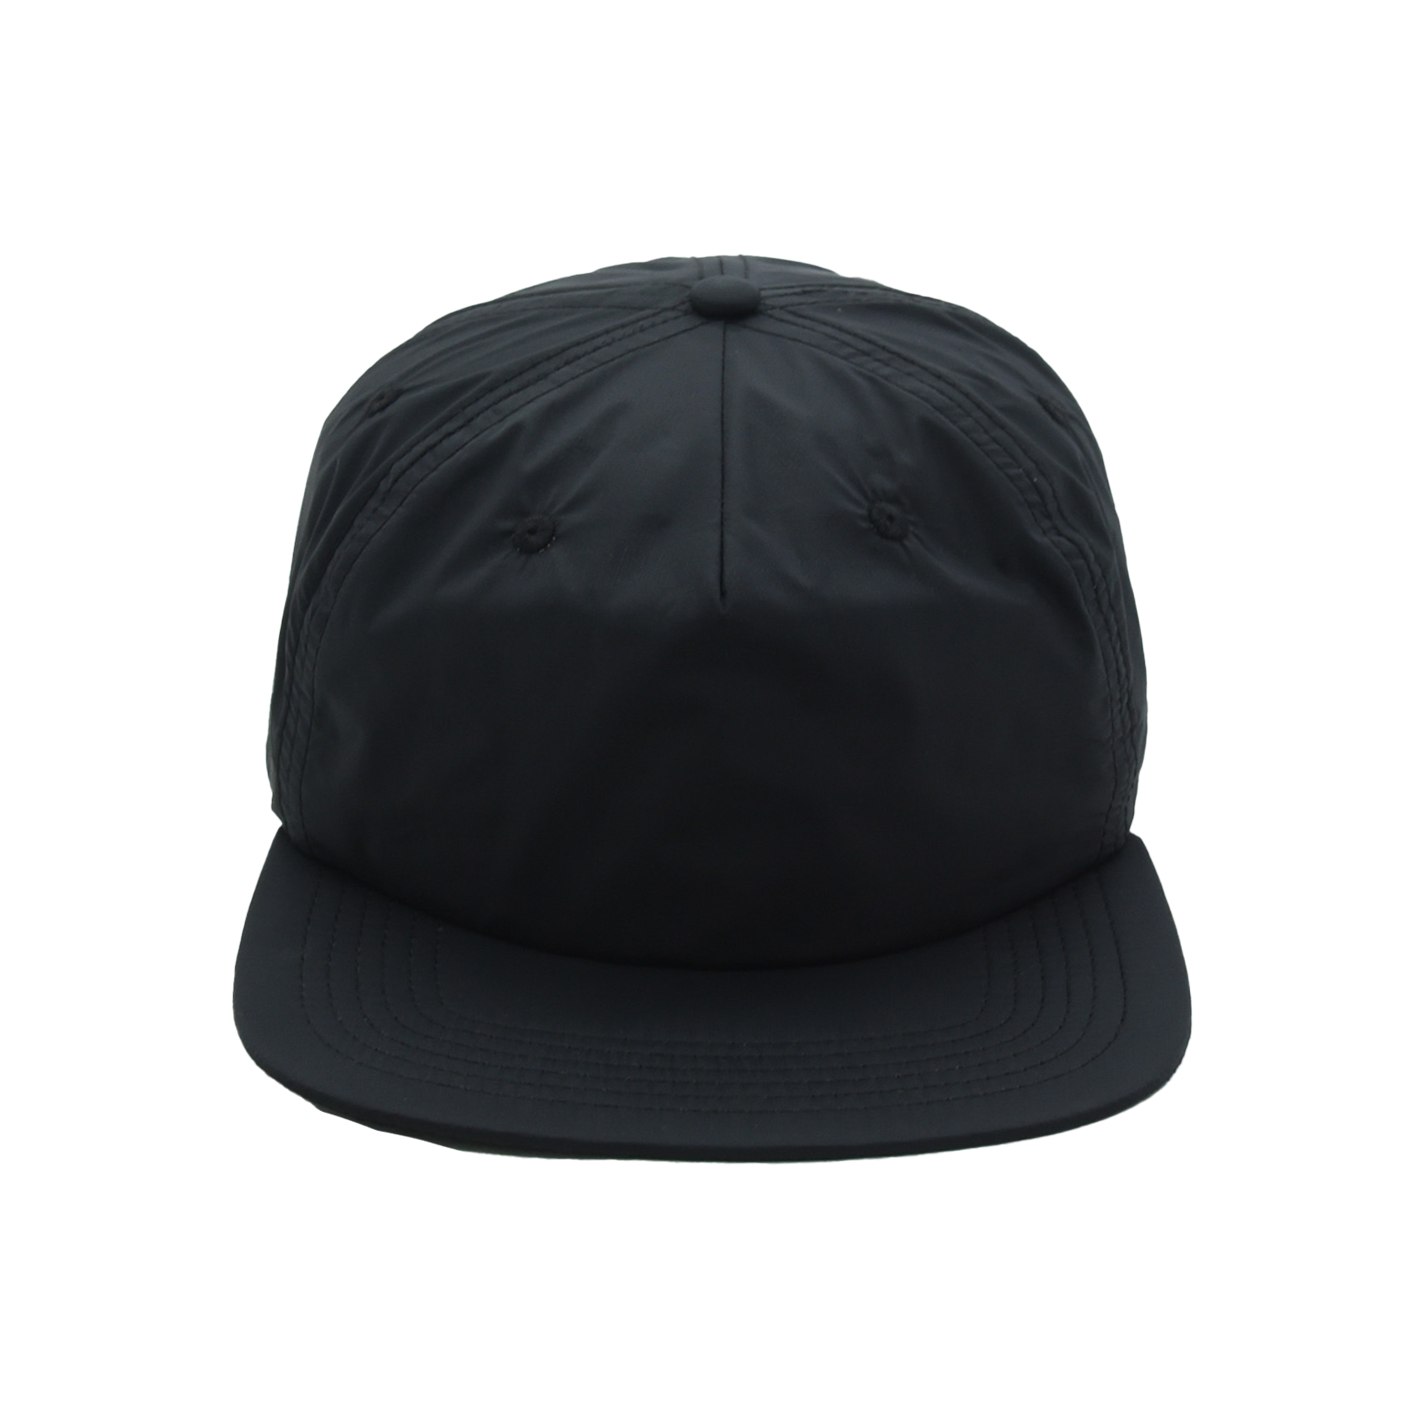 Black 5 panel snapback hat